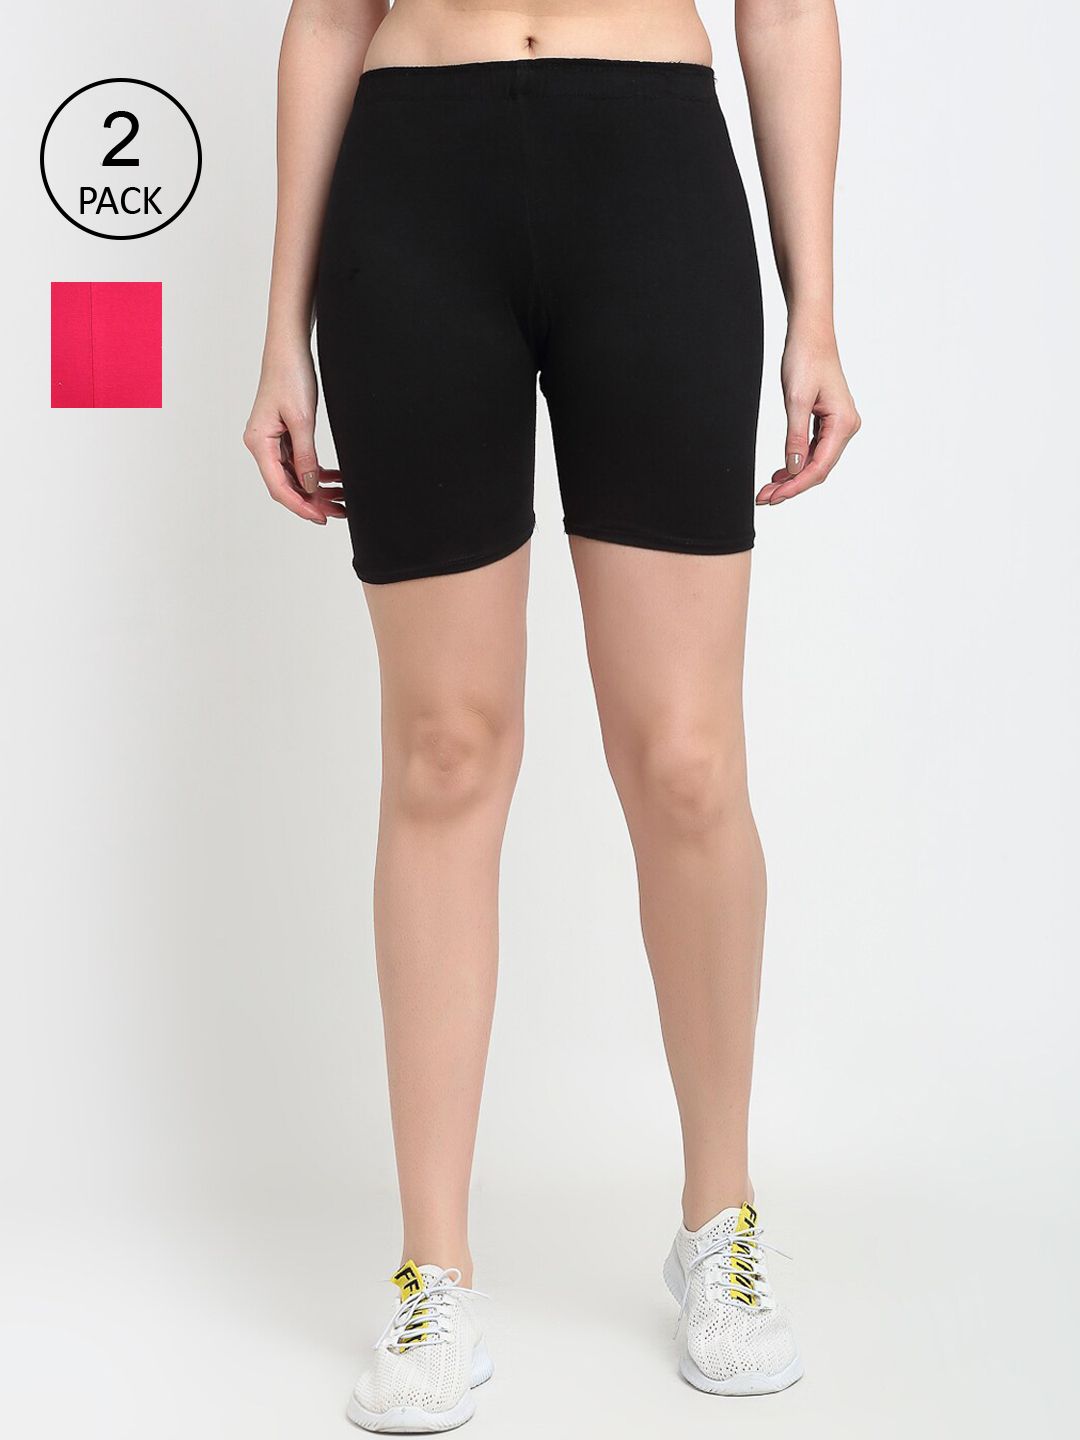 GRACIT Women Pack of 2 Black & Pink Biker Shorts Price in India